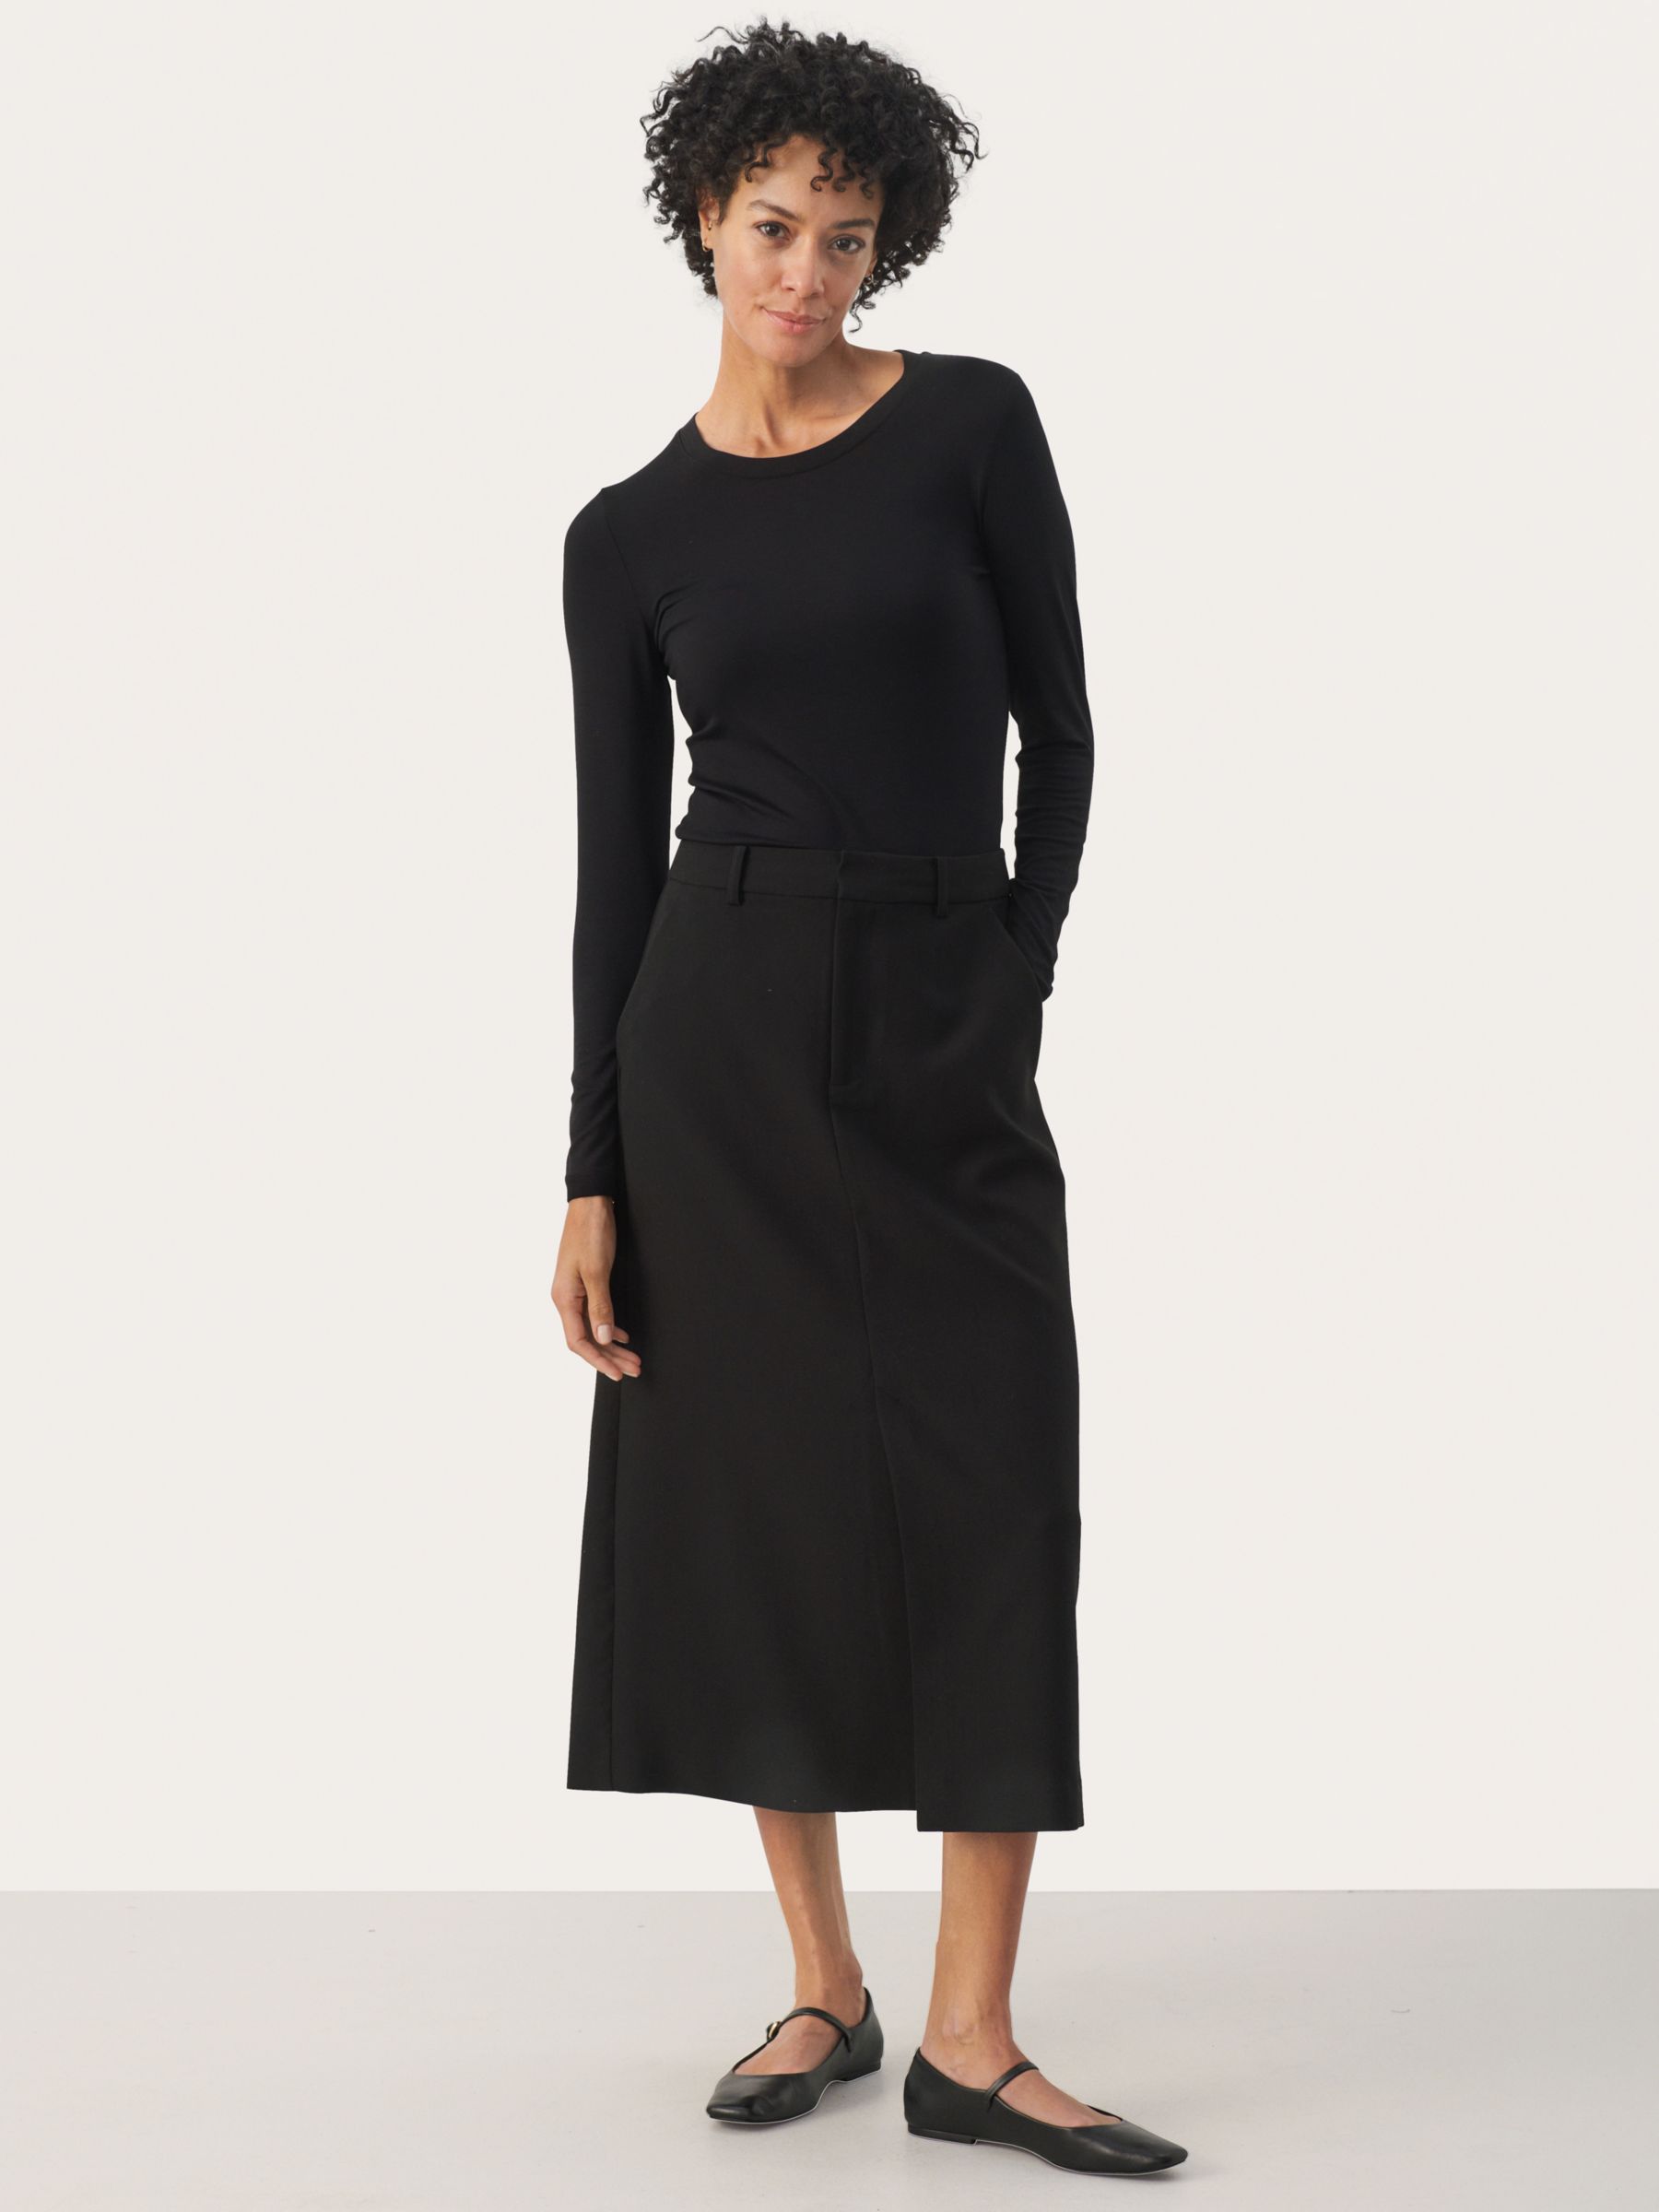 Buy Part Two Emelina Mid Calf Skirt, Black Online at johnlewis.com